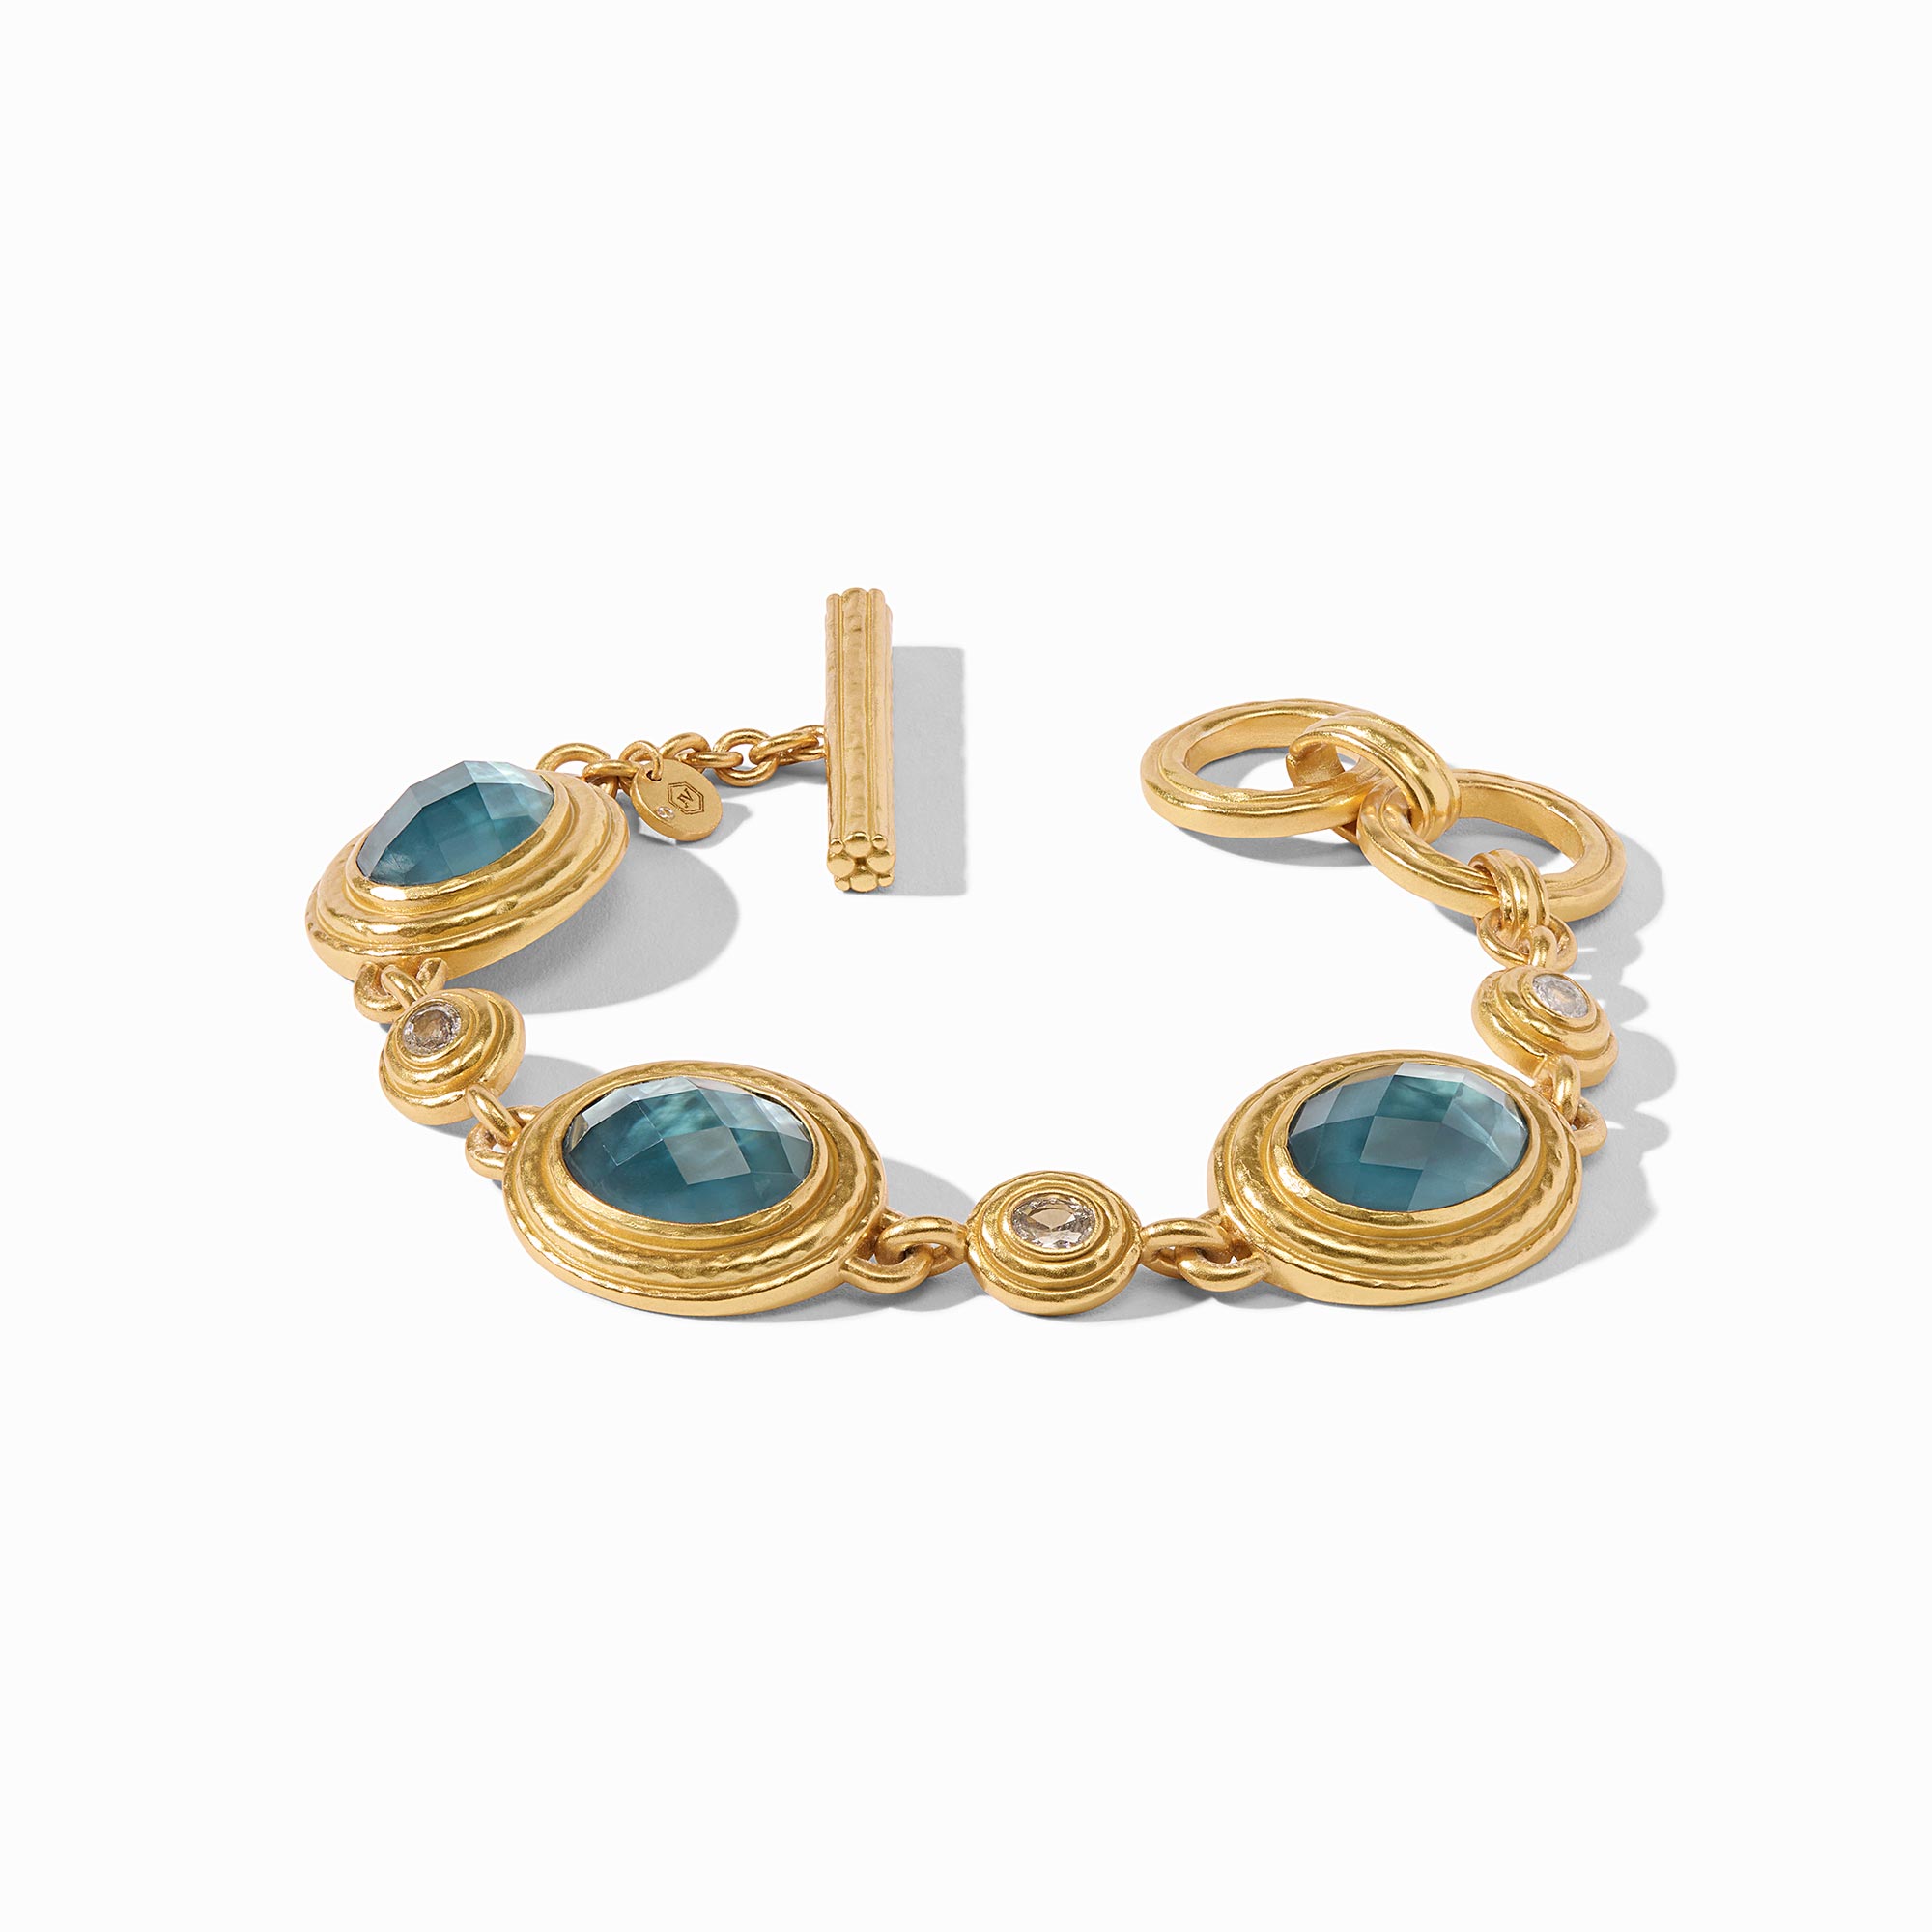 Julie Vos - Tudor Stone Bracelet, Iridescent Peacock Blue